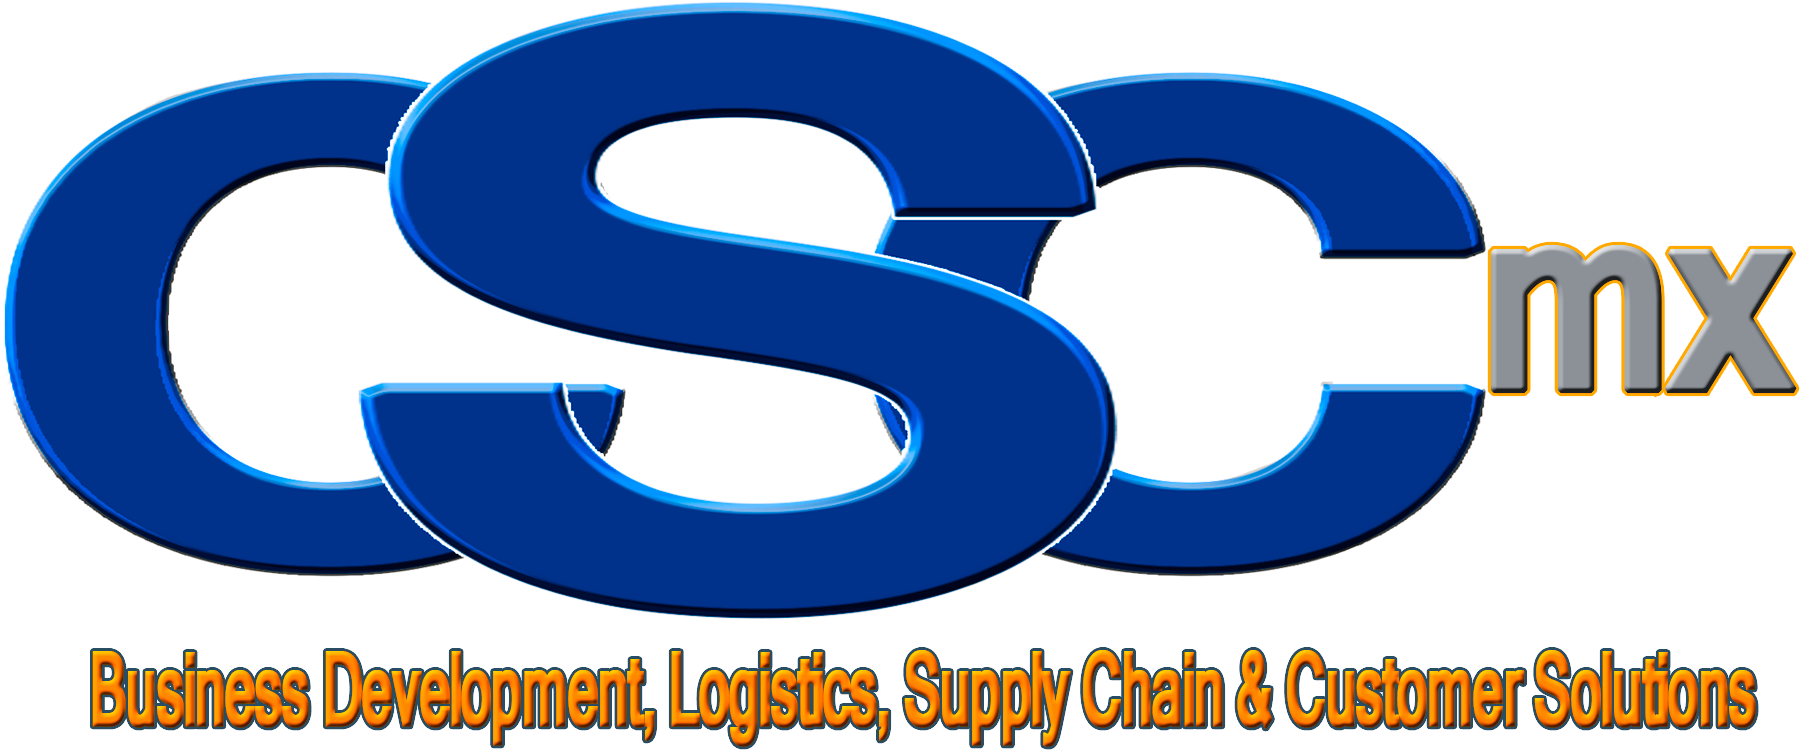 statistics clipart supply chain